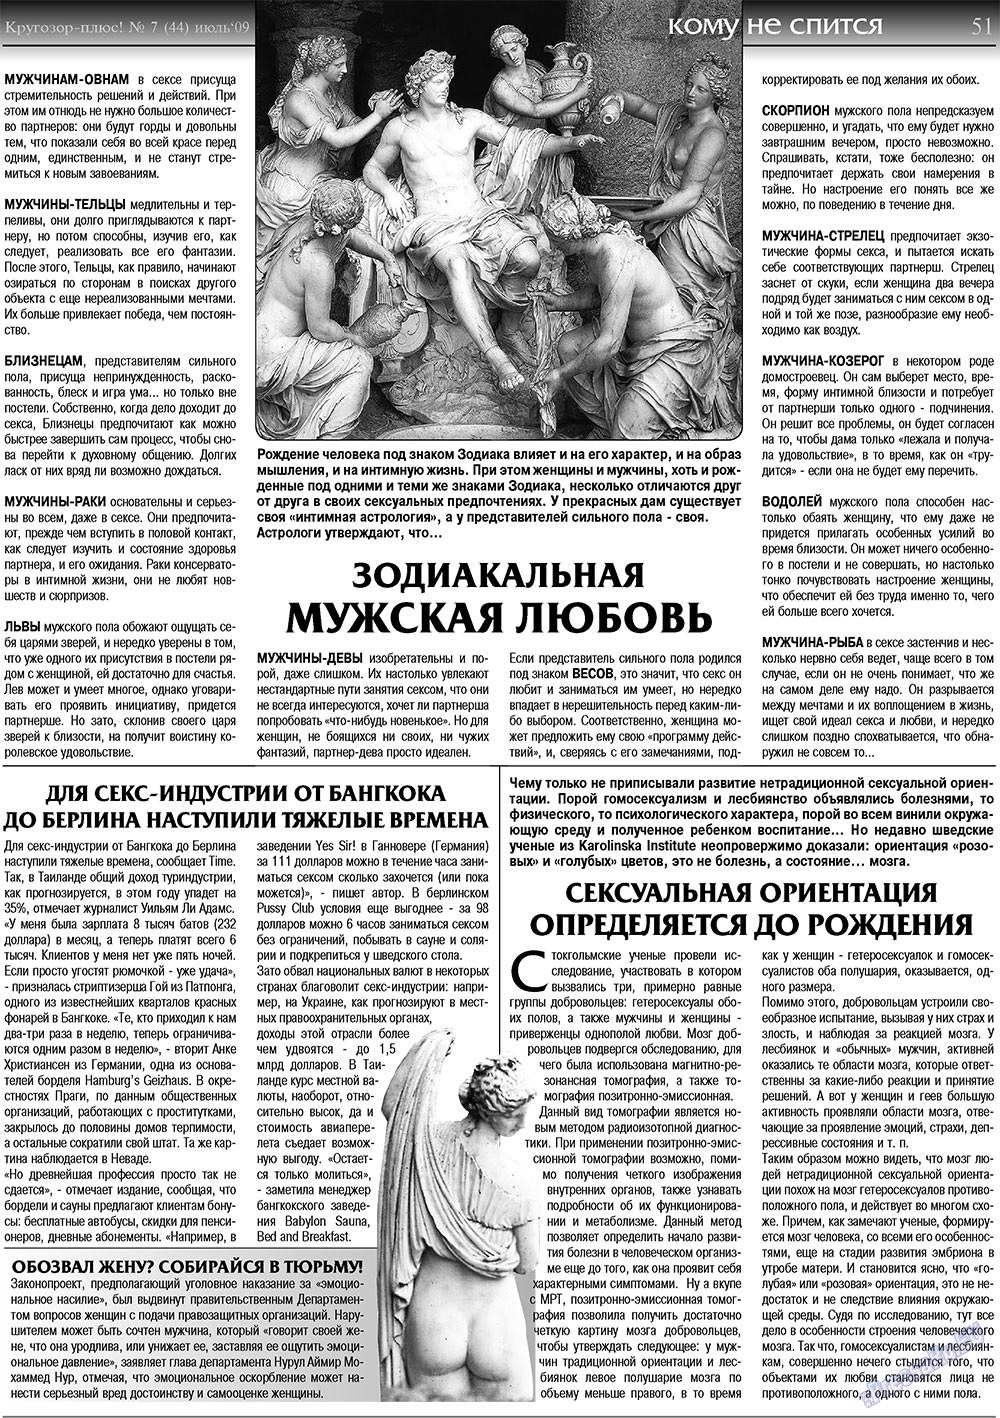 Кругозор плюс! (газета). 2009 год, номер 7, стр. 51